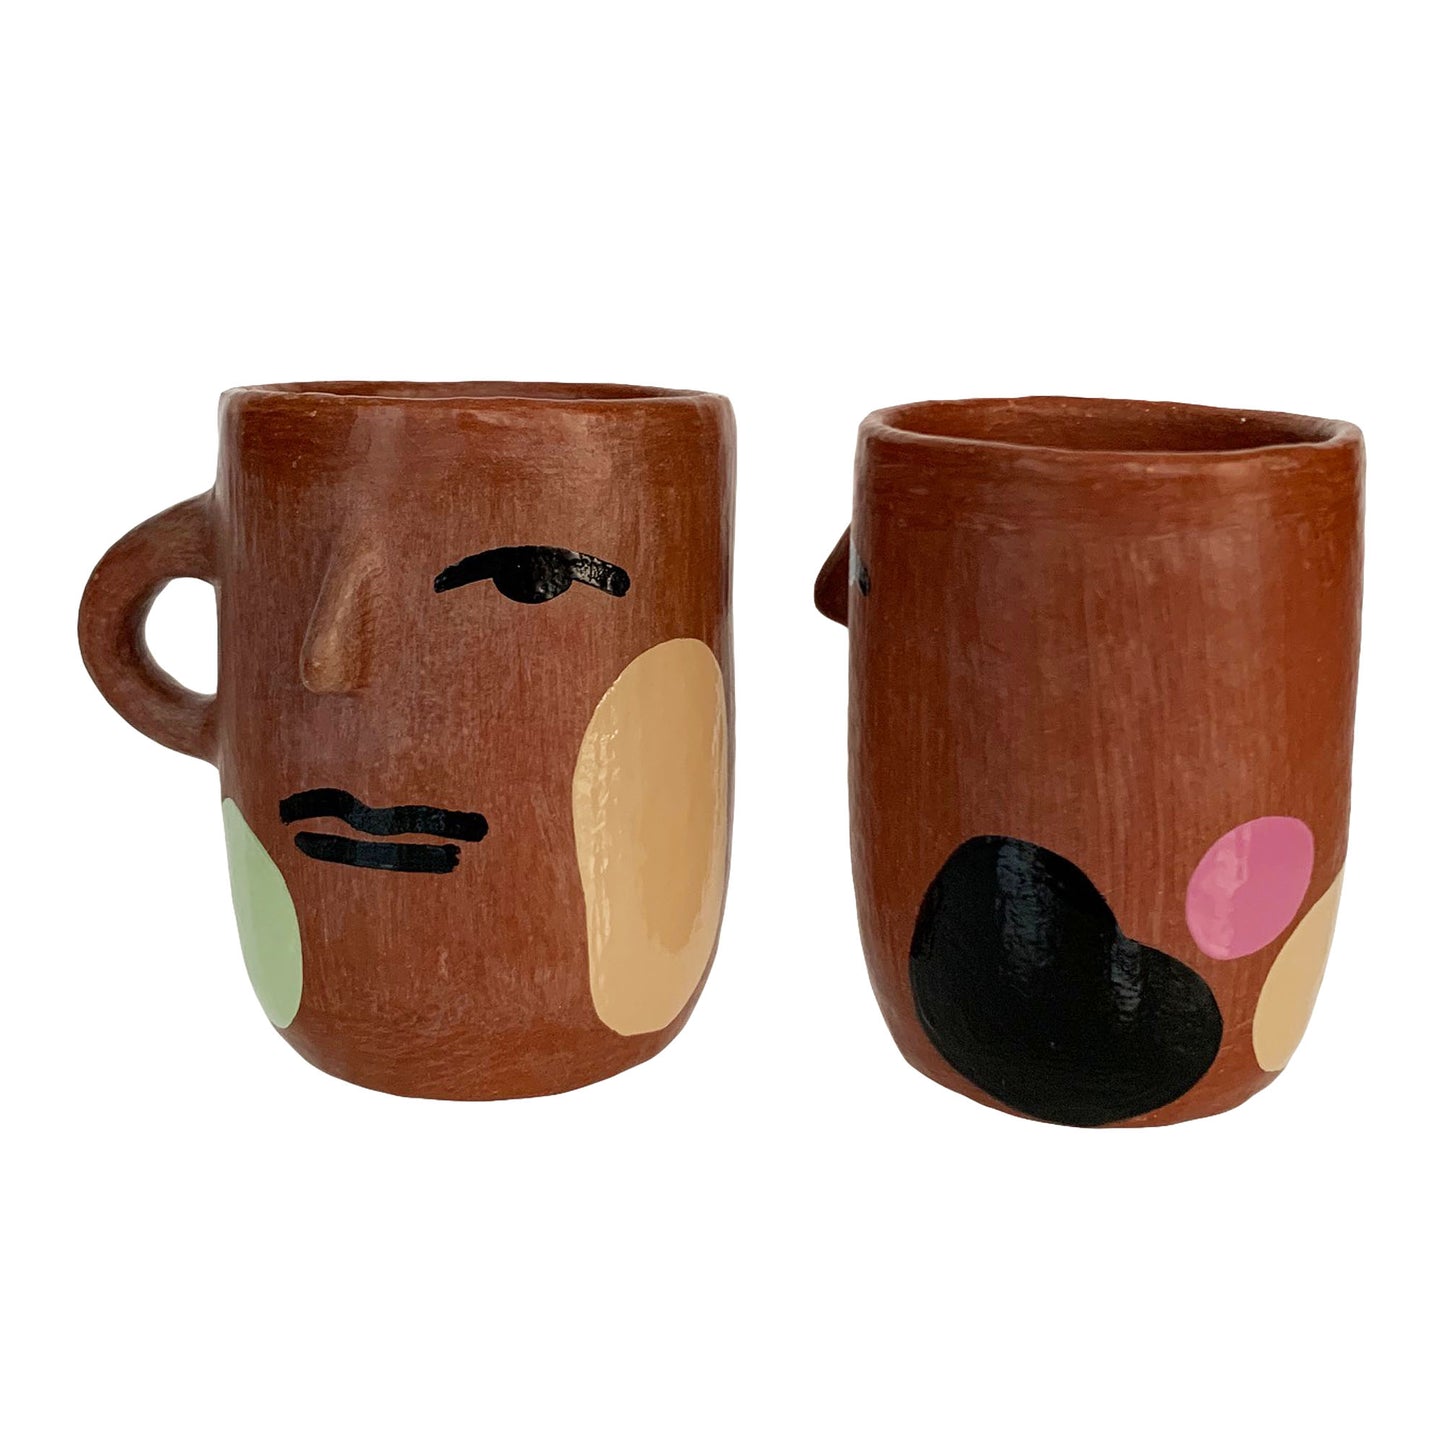 Painted Ladies - Red Clay Mug Handmade in Oaxaca, Mexico